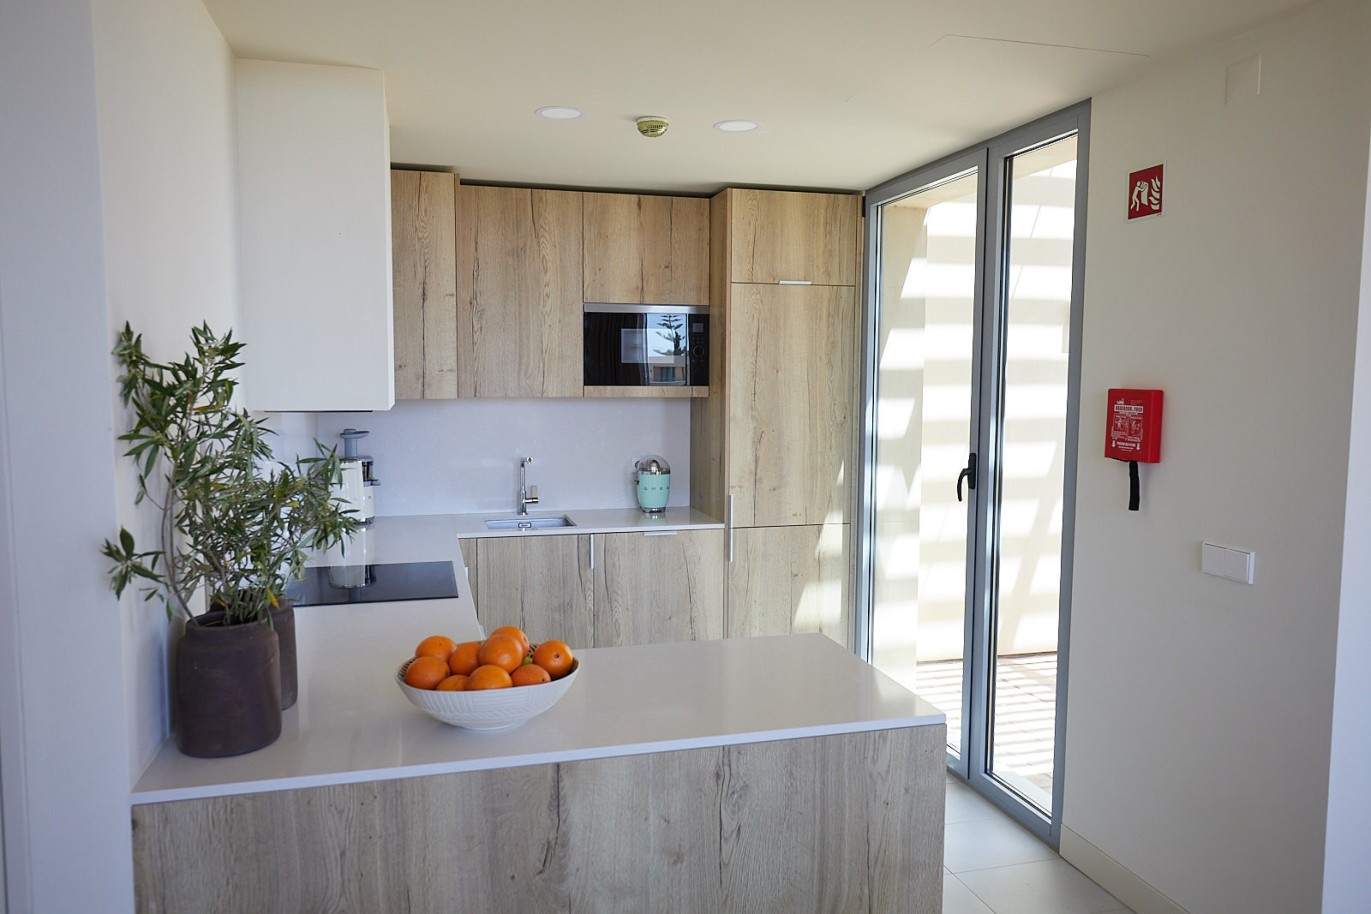 1 bedroom apartment in resort, for sale in Porches, Algarve_228999